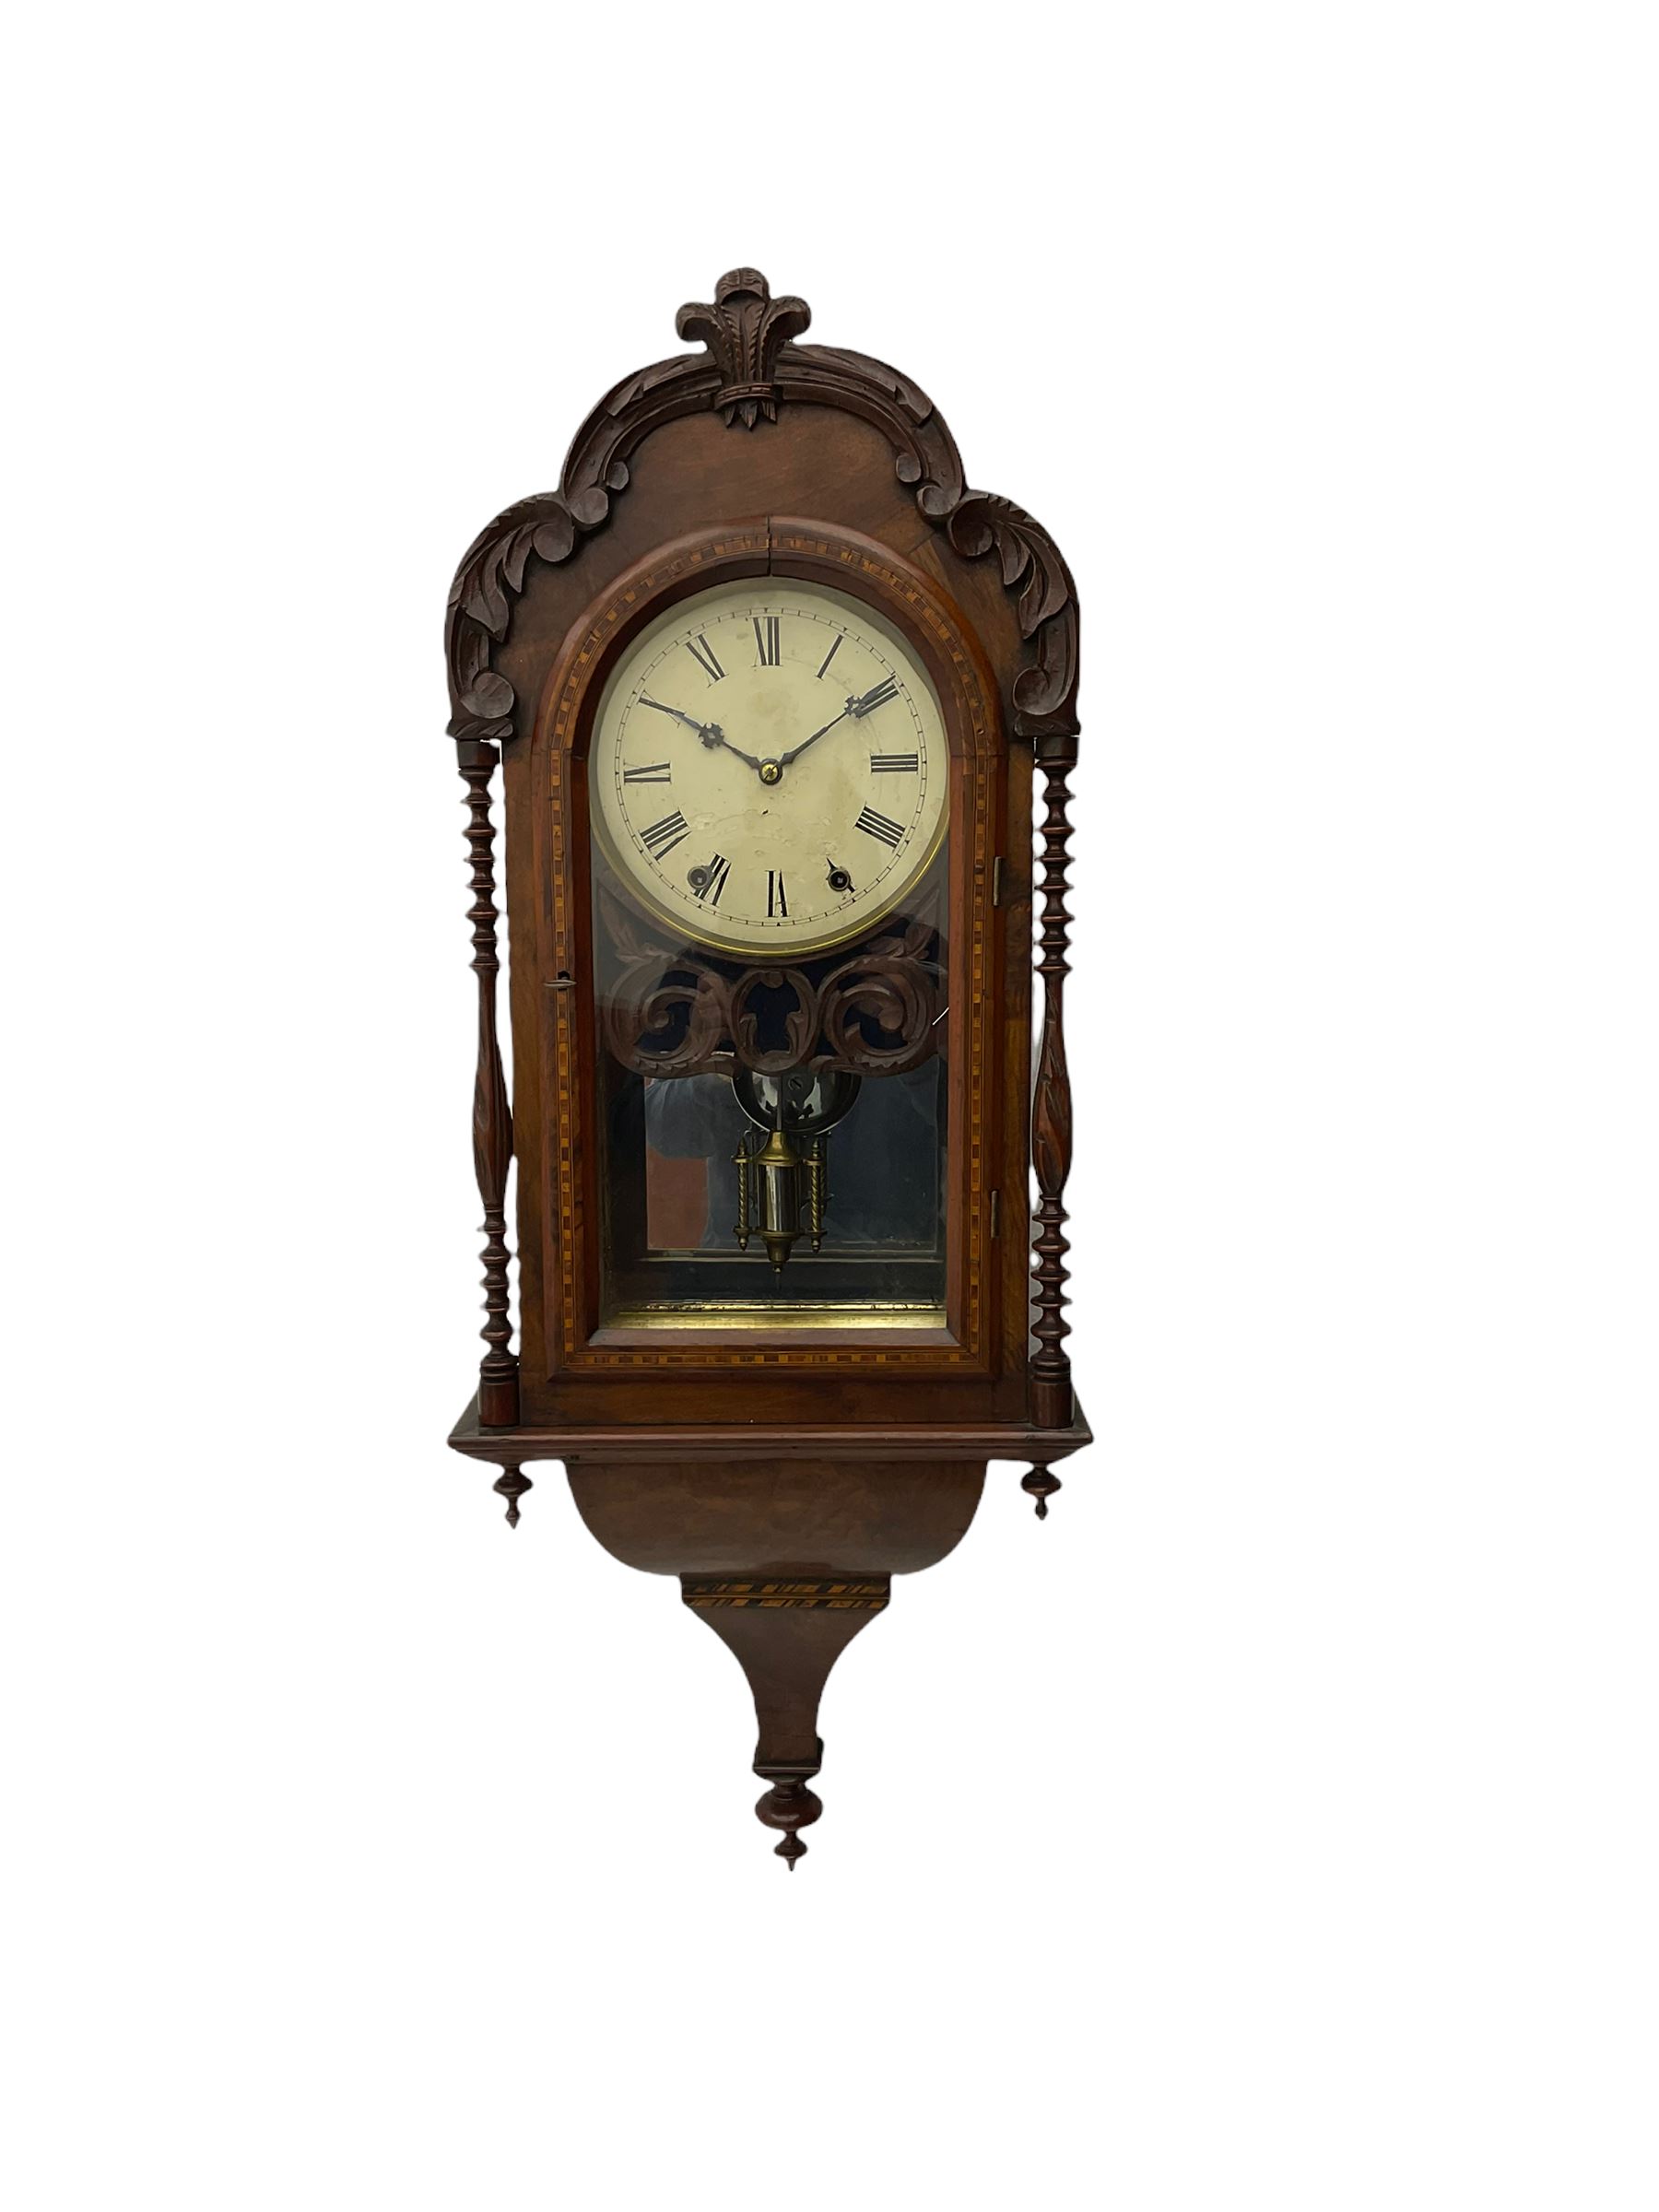 A 19thcentury American Wall Clock In A Walnut Case With Crossbanding